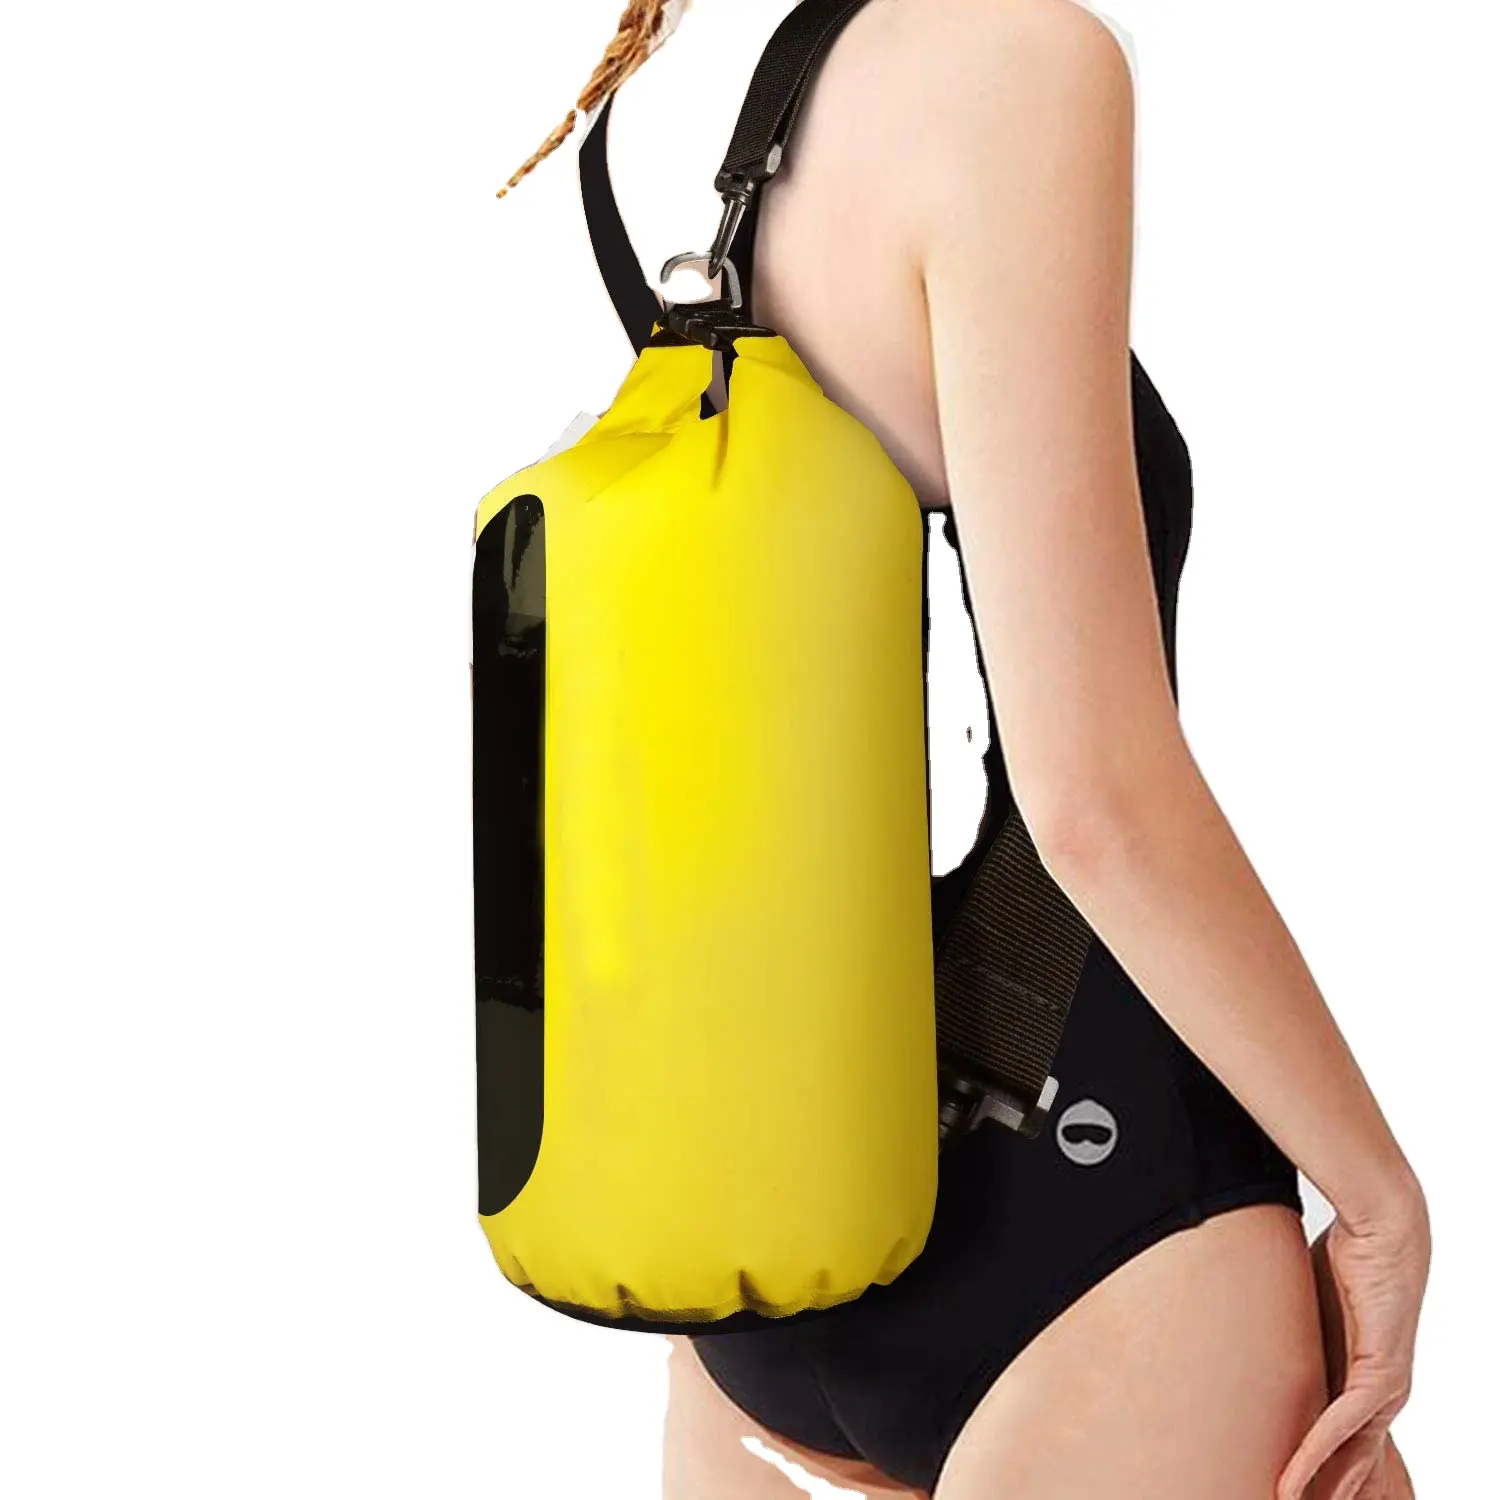 Free Sample BSCI 500D PVC 100% Waterproof Storage Bags dry bags for Hiking, Camping, Fishing, Biking, Skiing